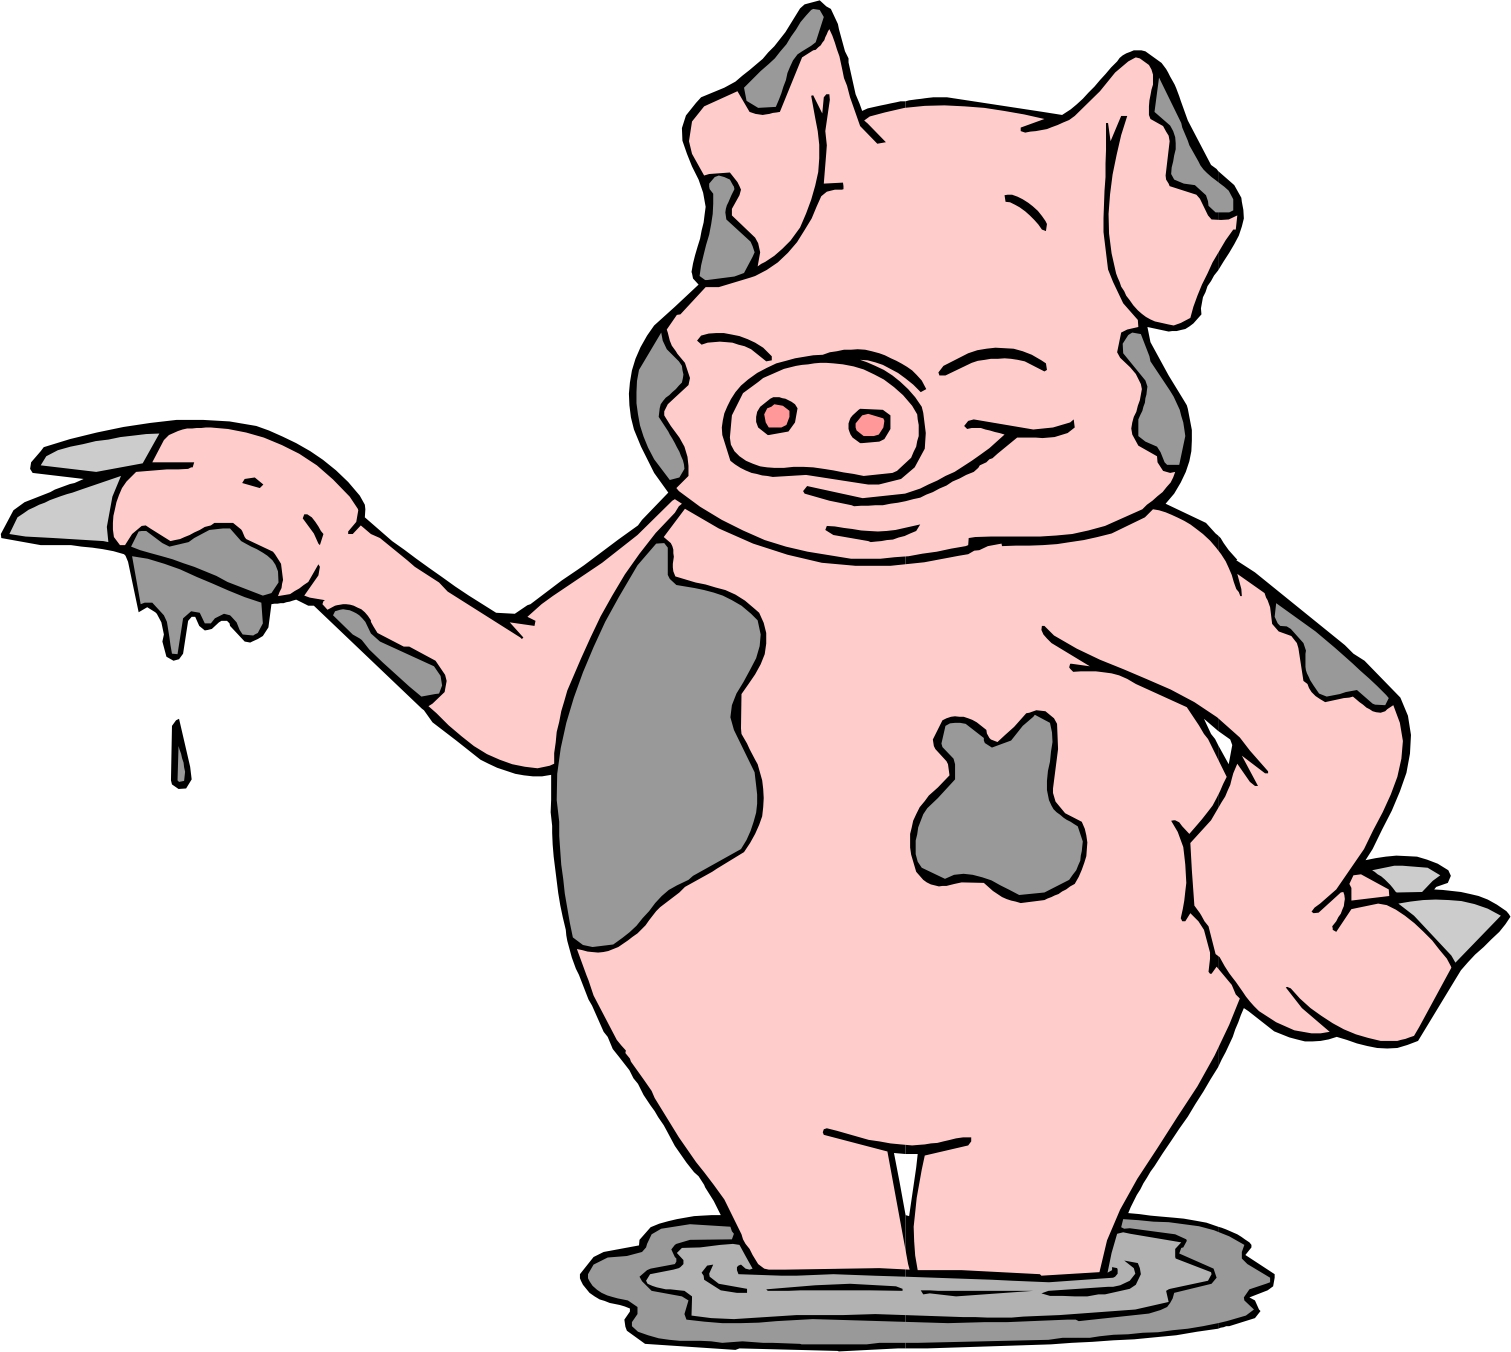 free clipart of cartoon pigs - photo #45